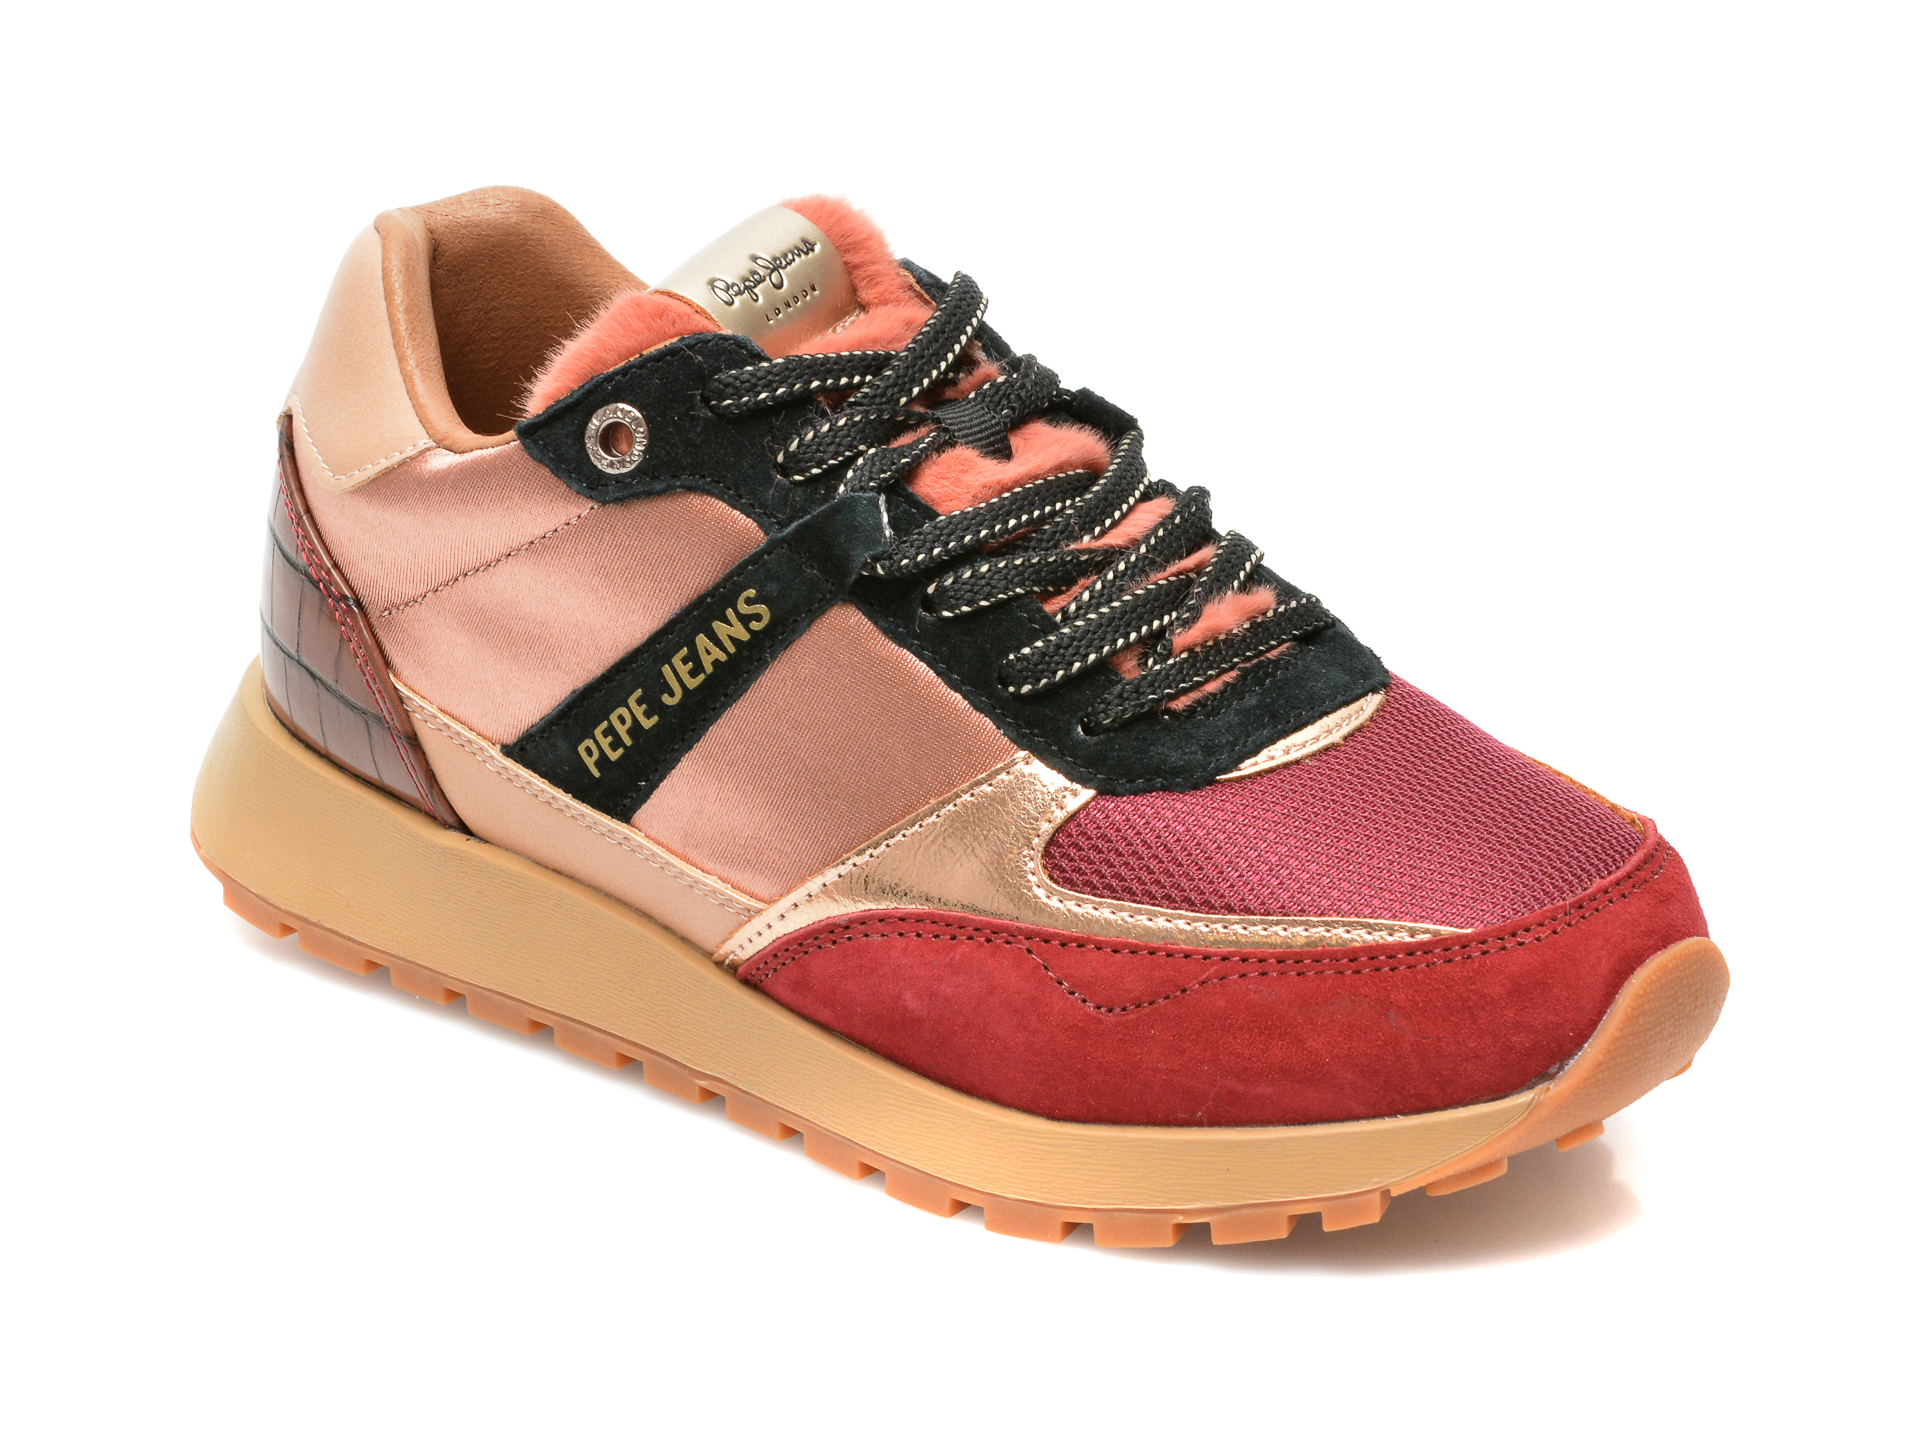 Pantofi sport PEPE JEANS roz, LS31219, din material textil si piele intoarsa